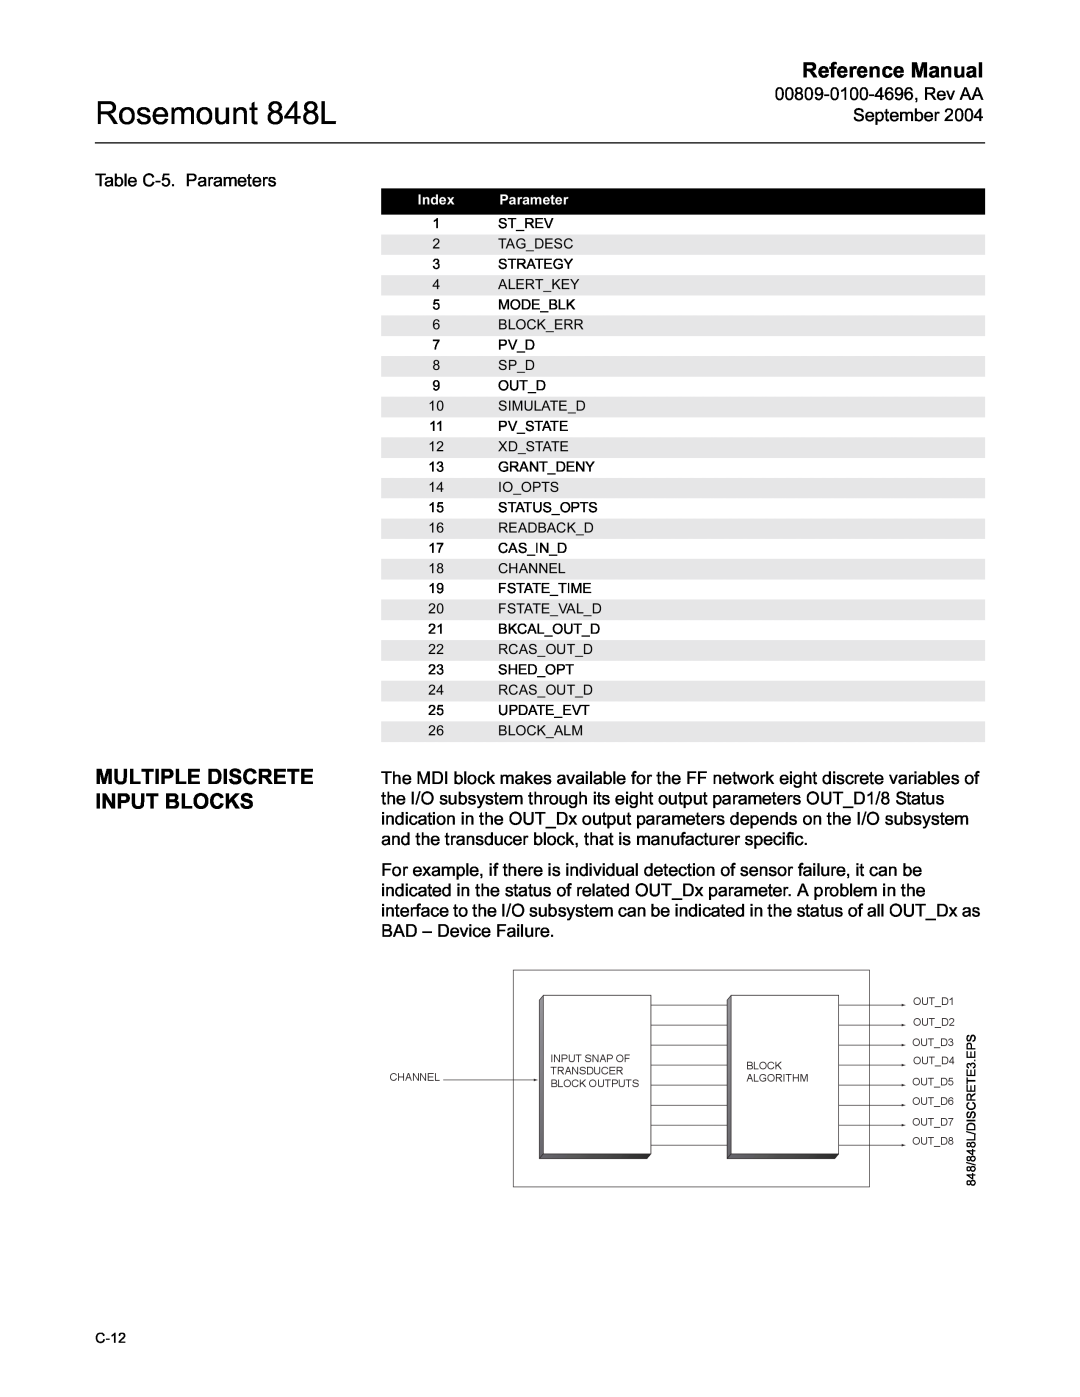 Emerson manual Multiple Discrete Input Blocks, Rosemount 848L, Reference Manual 